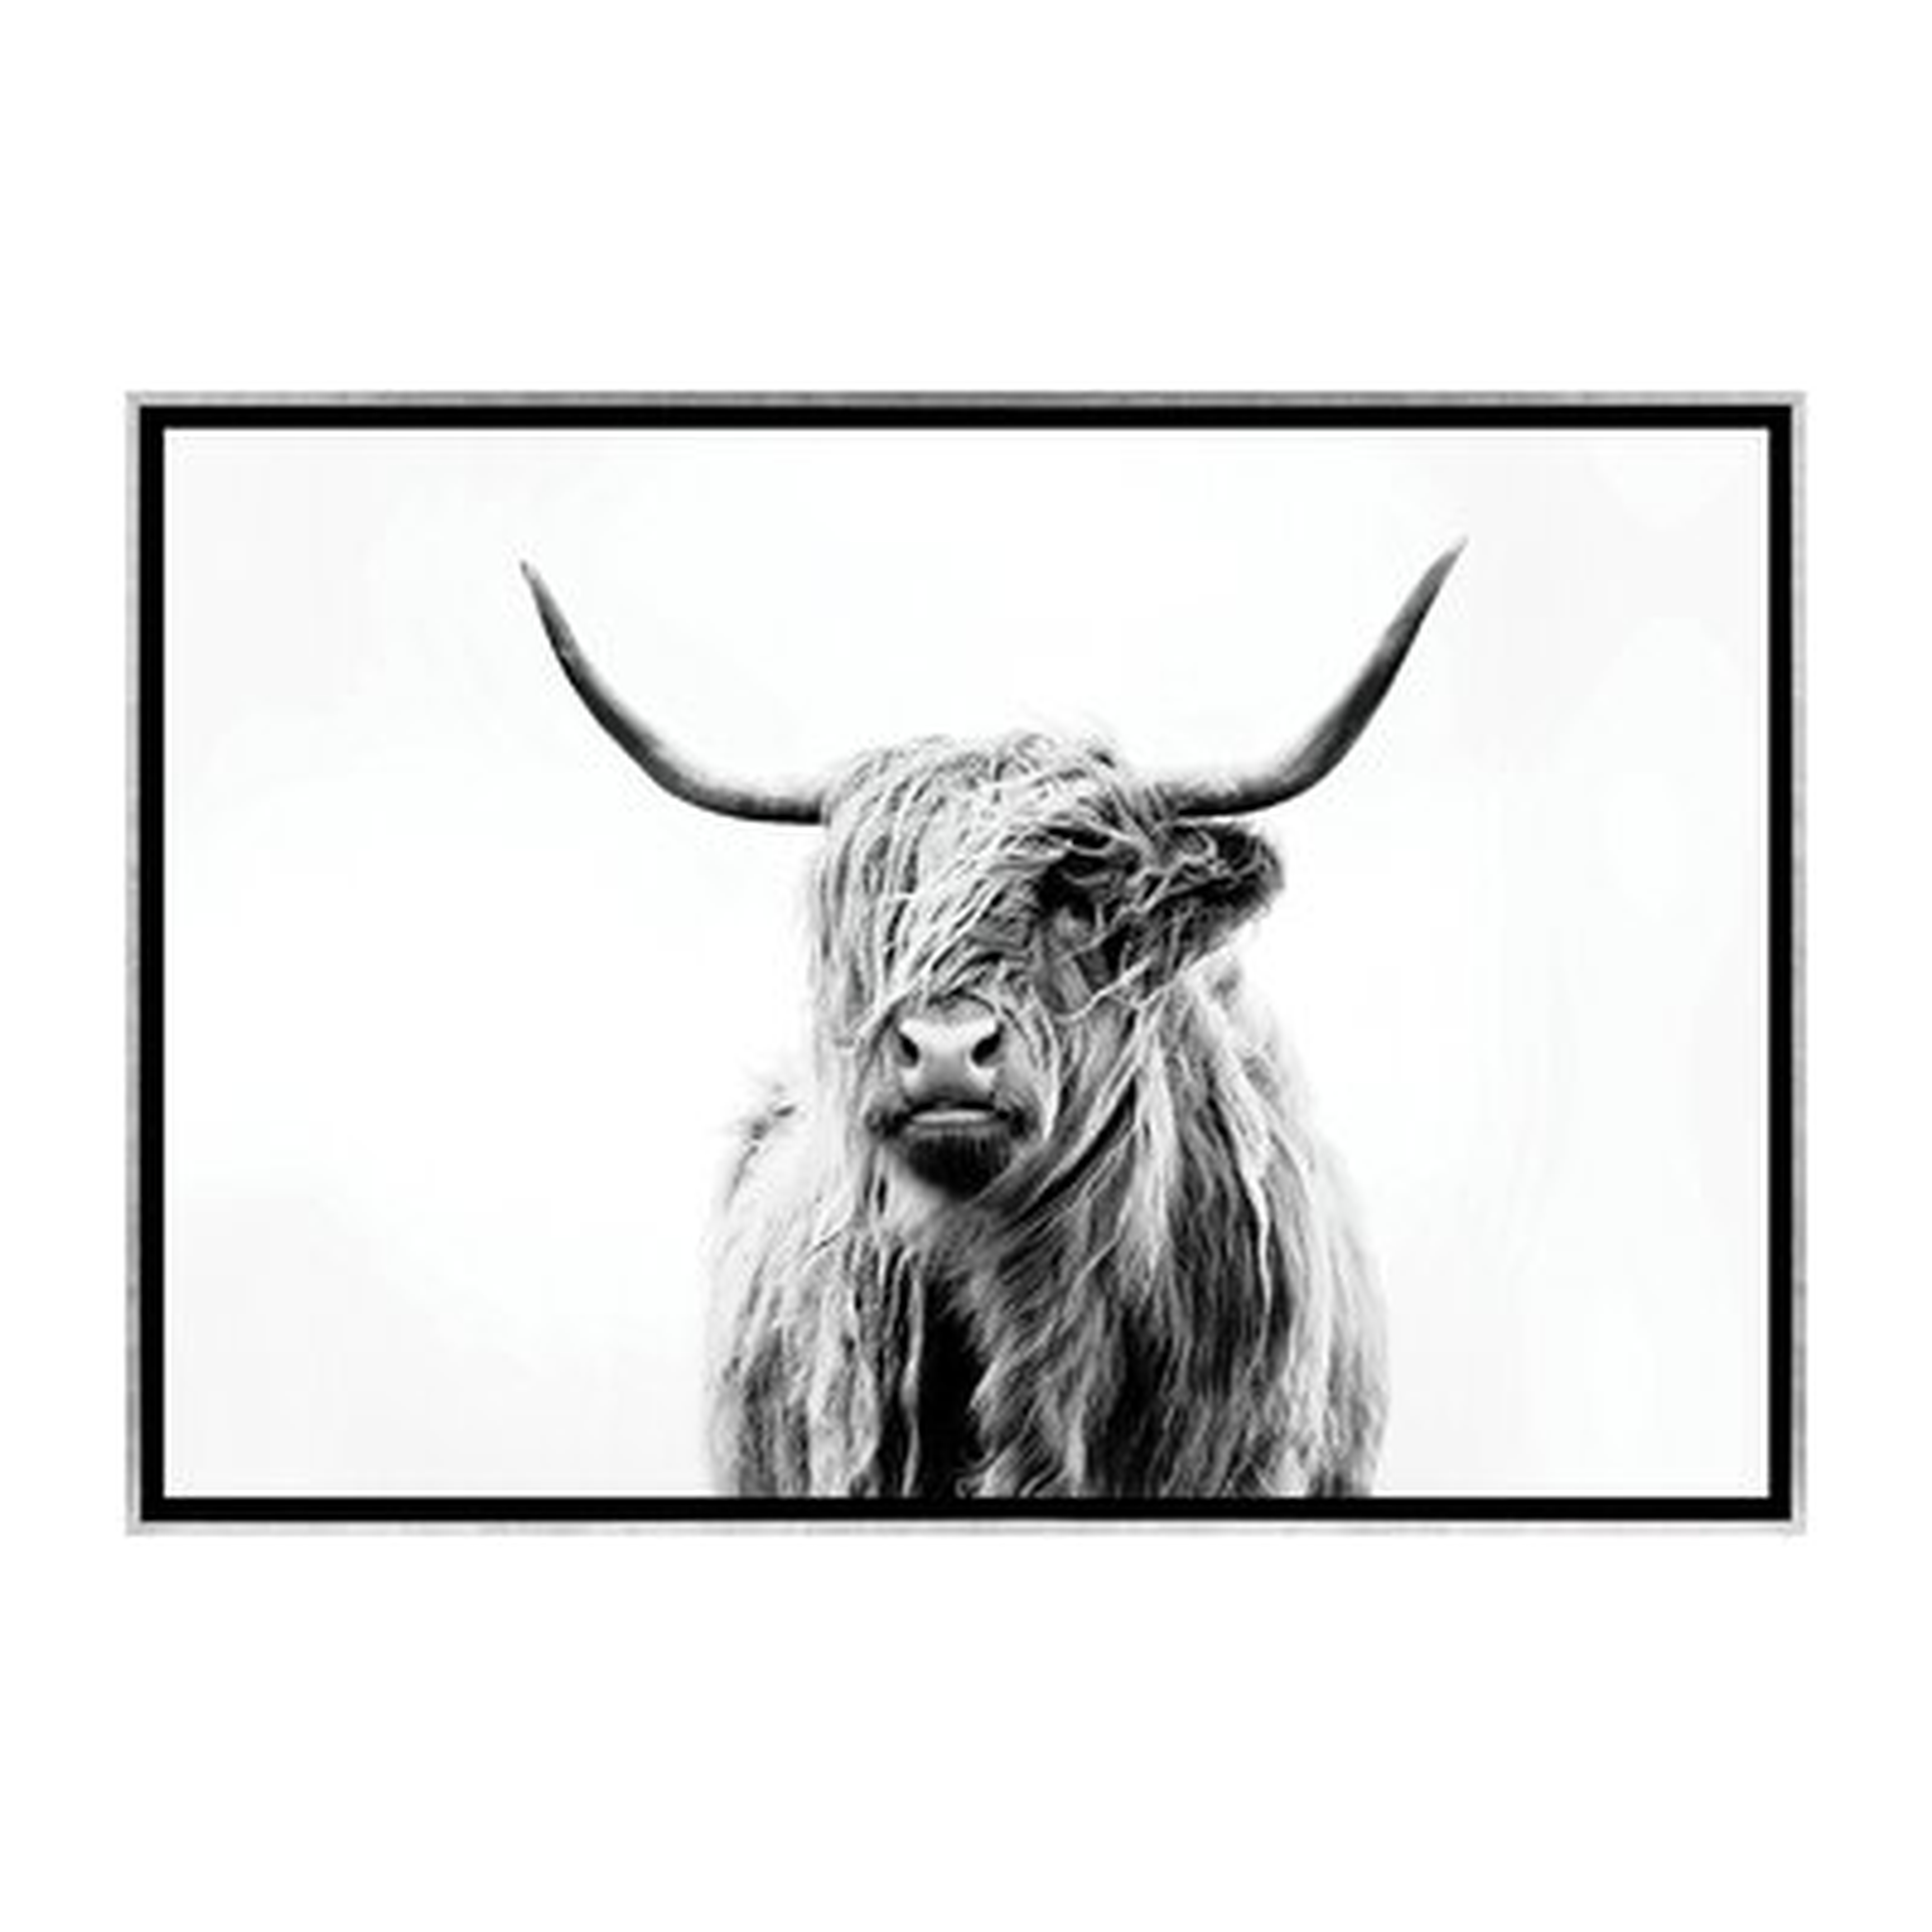 'Portrait of a Highland Cow' by Dorit Fuhg - Painting Print - Wayfair